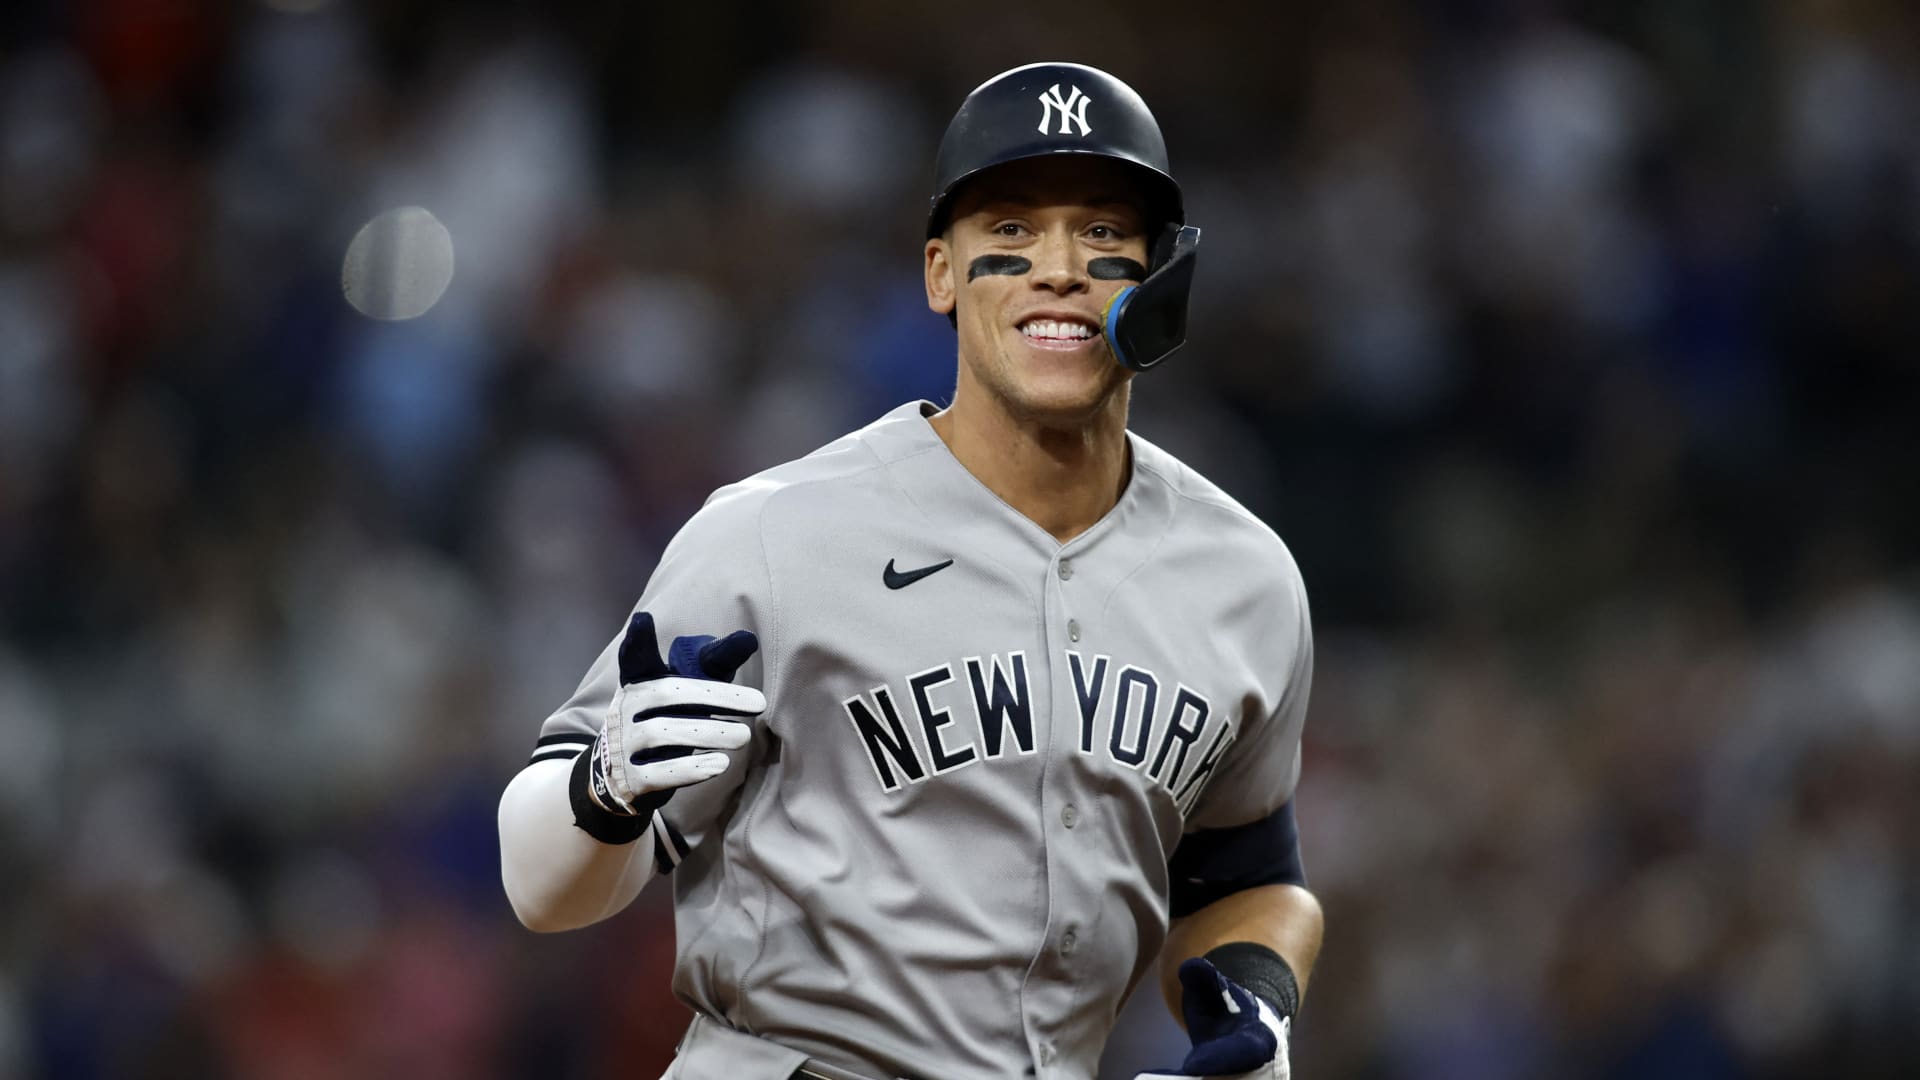 Judge, Yankees on top as baseball returns from All-Star break